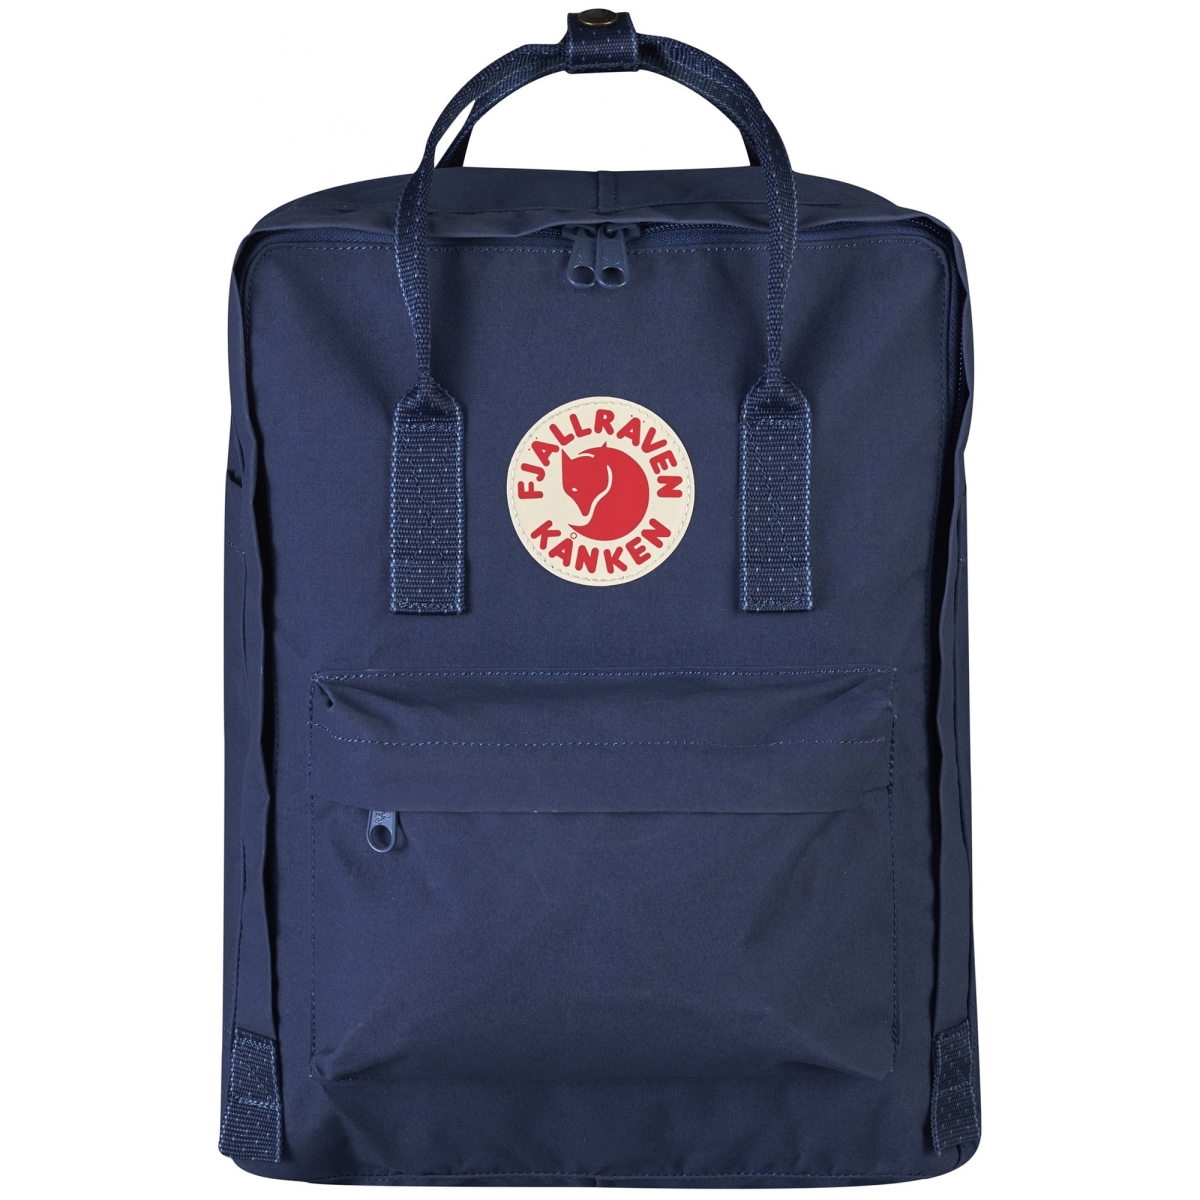 23510-540-902 Kanken Classic Backpack For Everyday, Royal Blue & Pinstripe Pattern